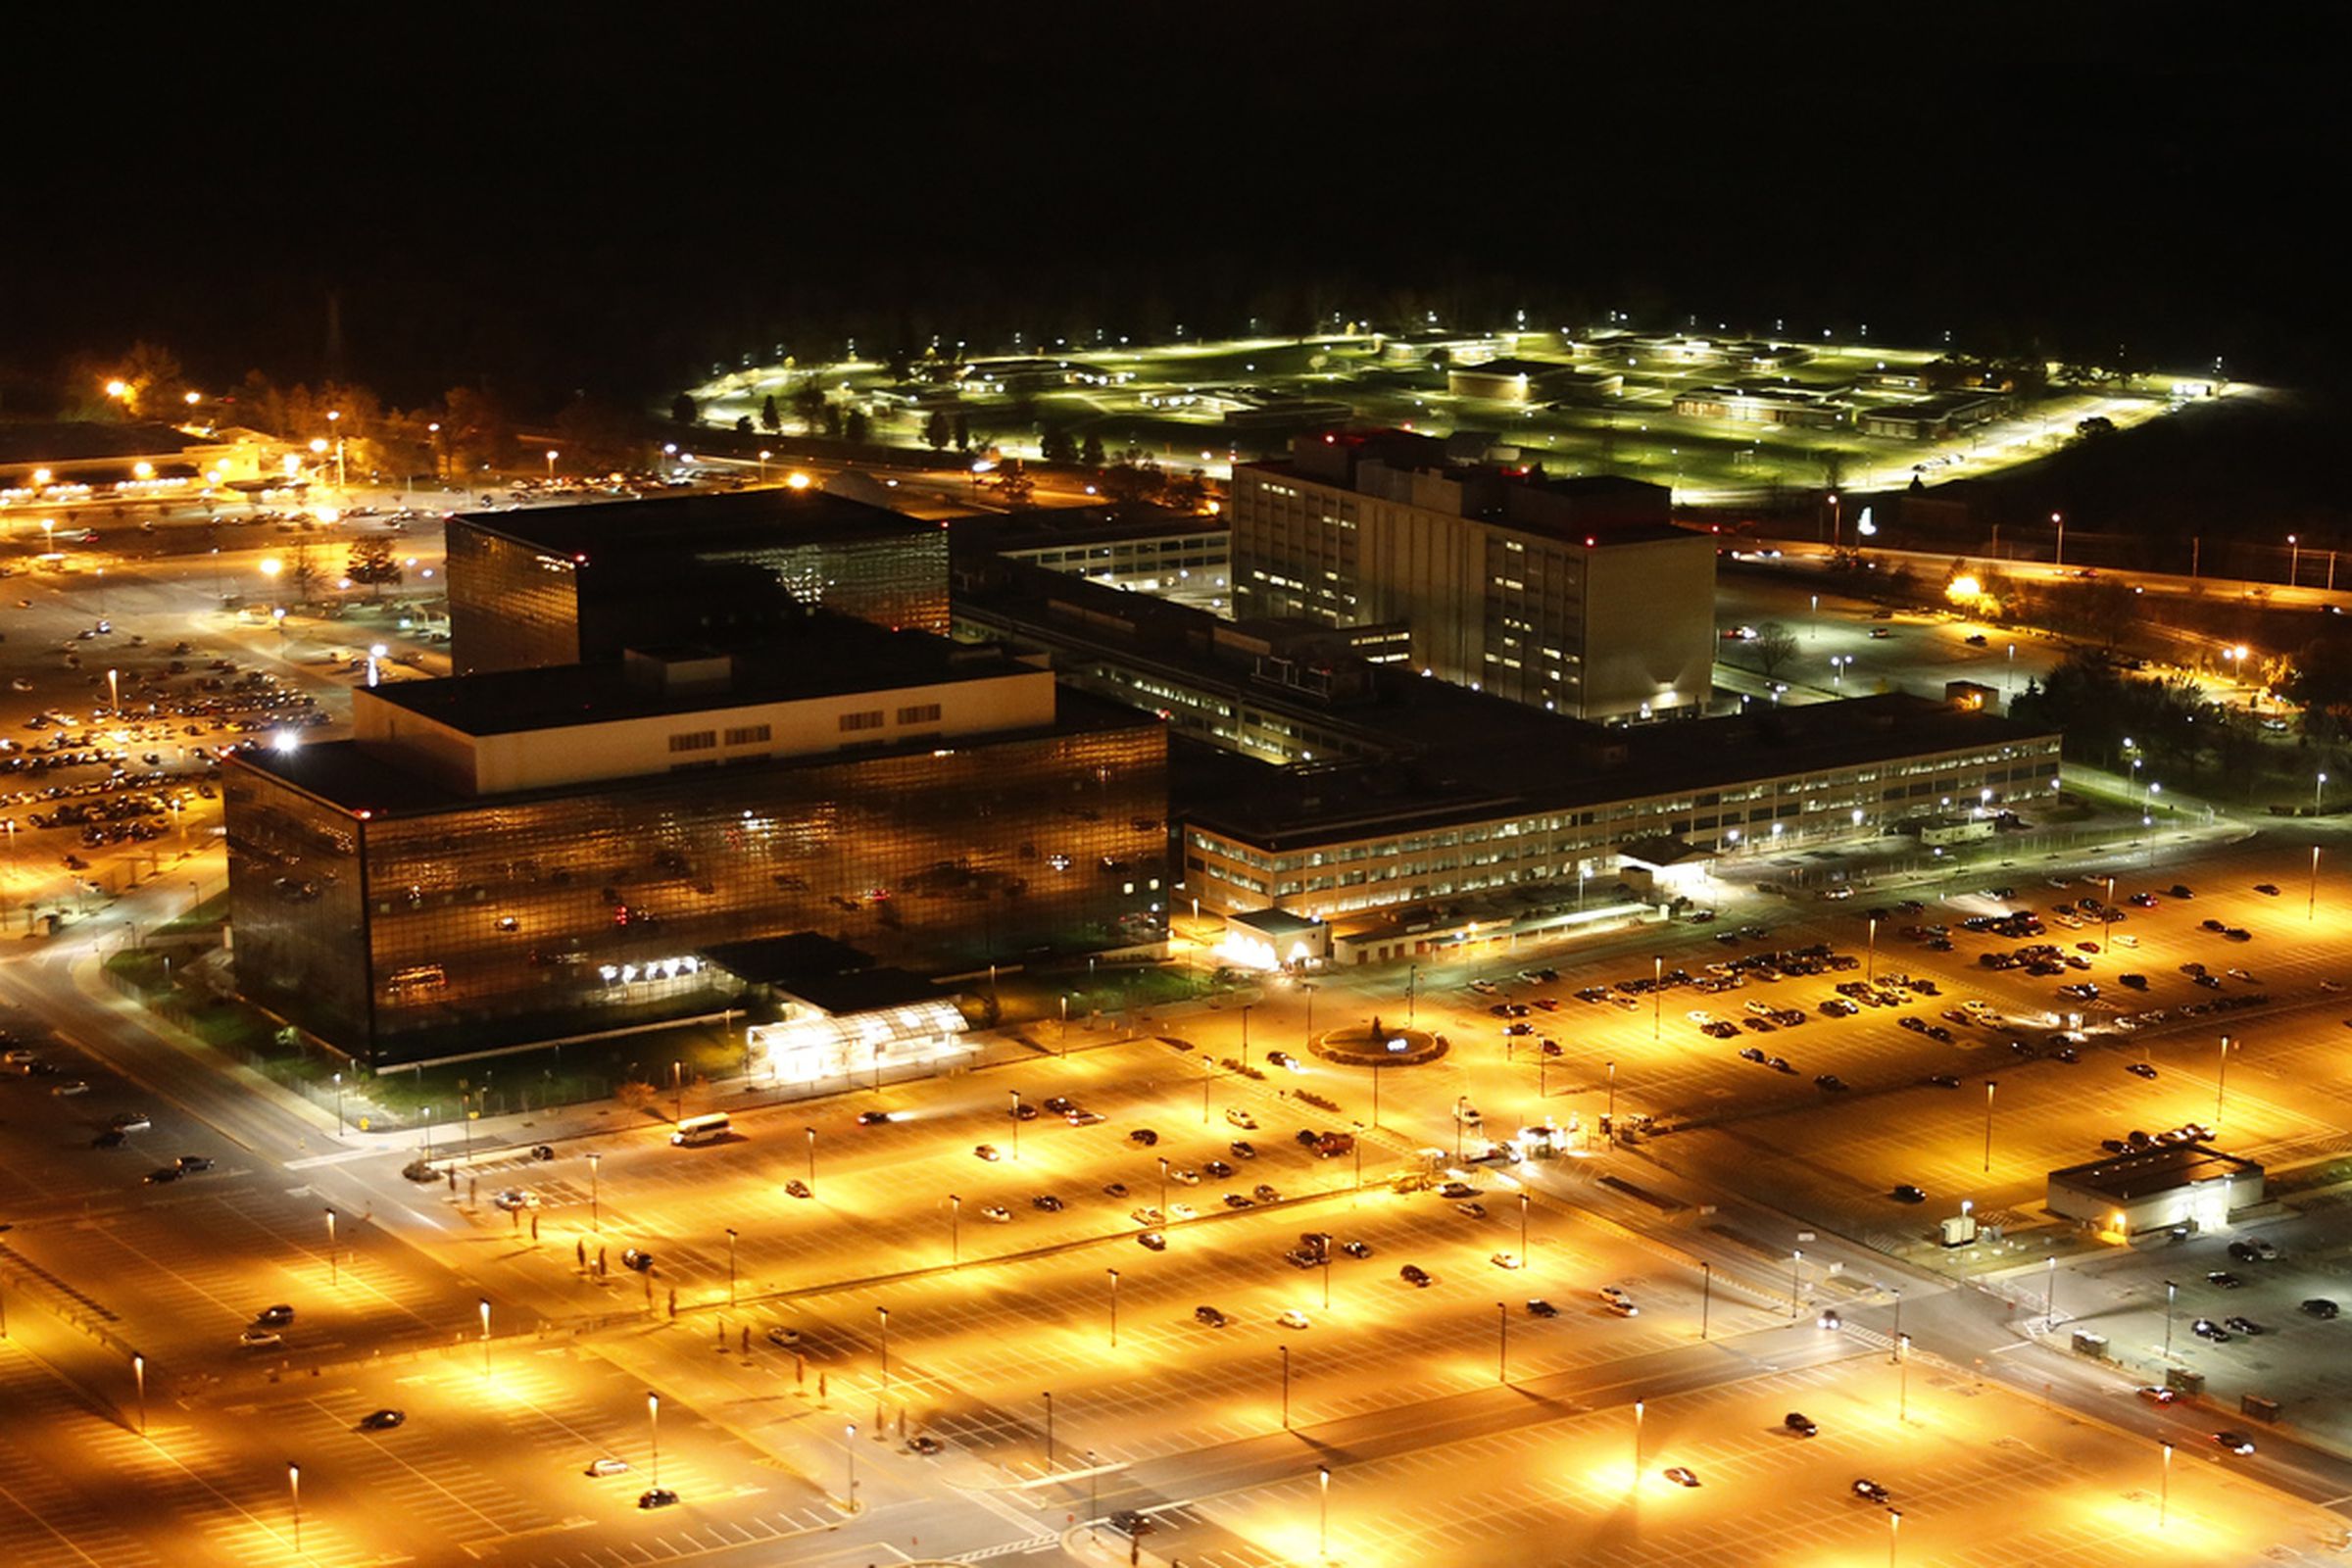 NSA headquarters at night (Public domain)